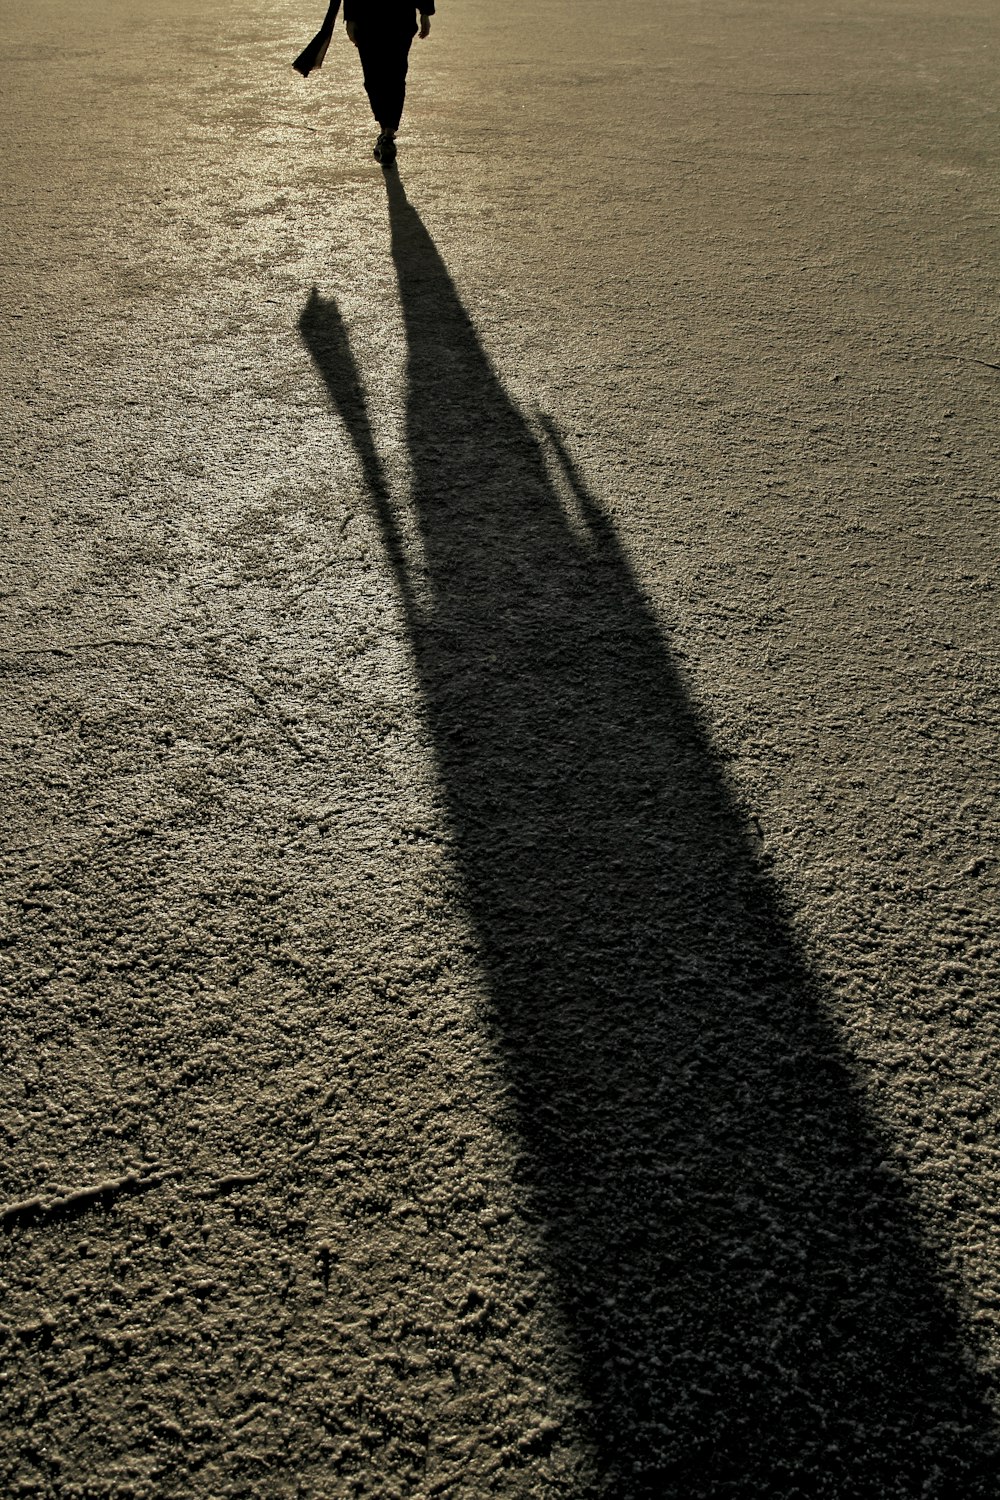 a shadow of a person walking across a field